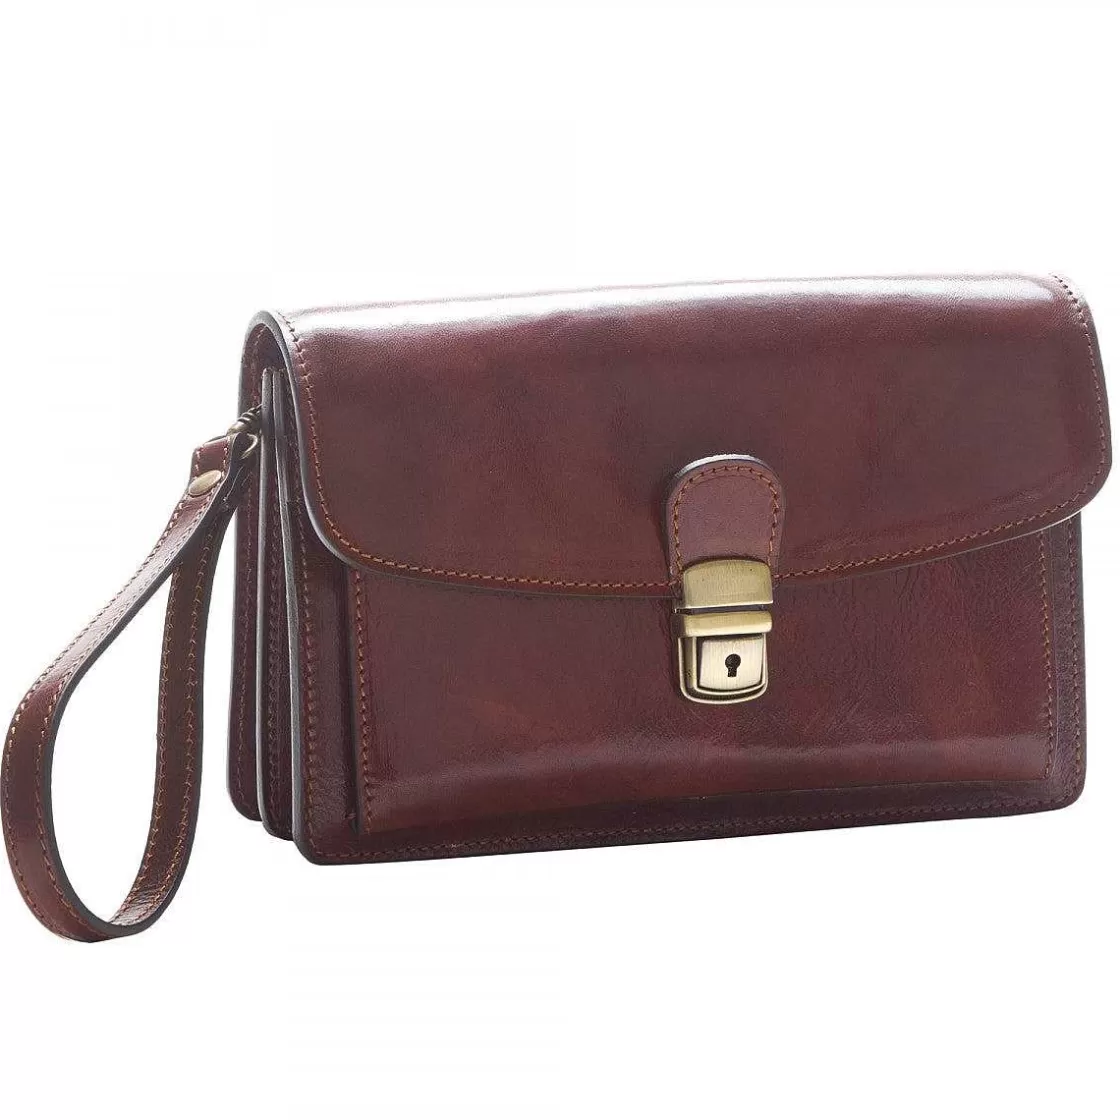 Leonardo Handbag In Leather Full Grain With Tuc Closure And Two Compartments Sale